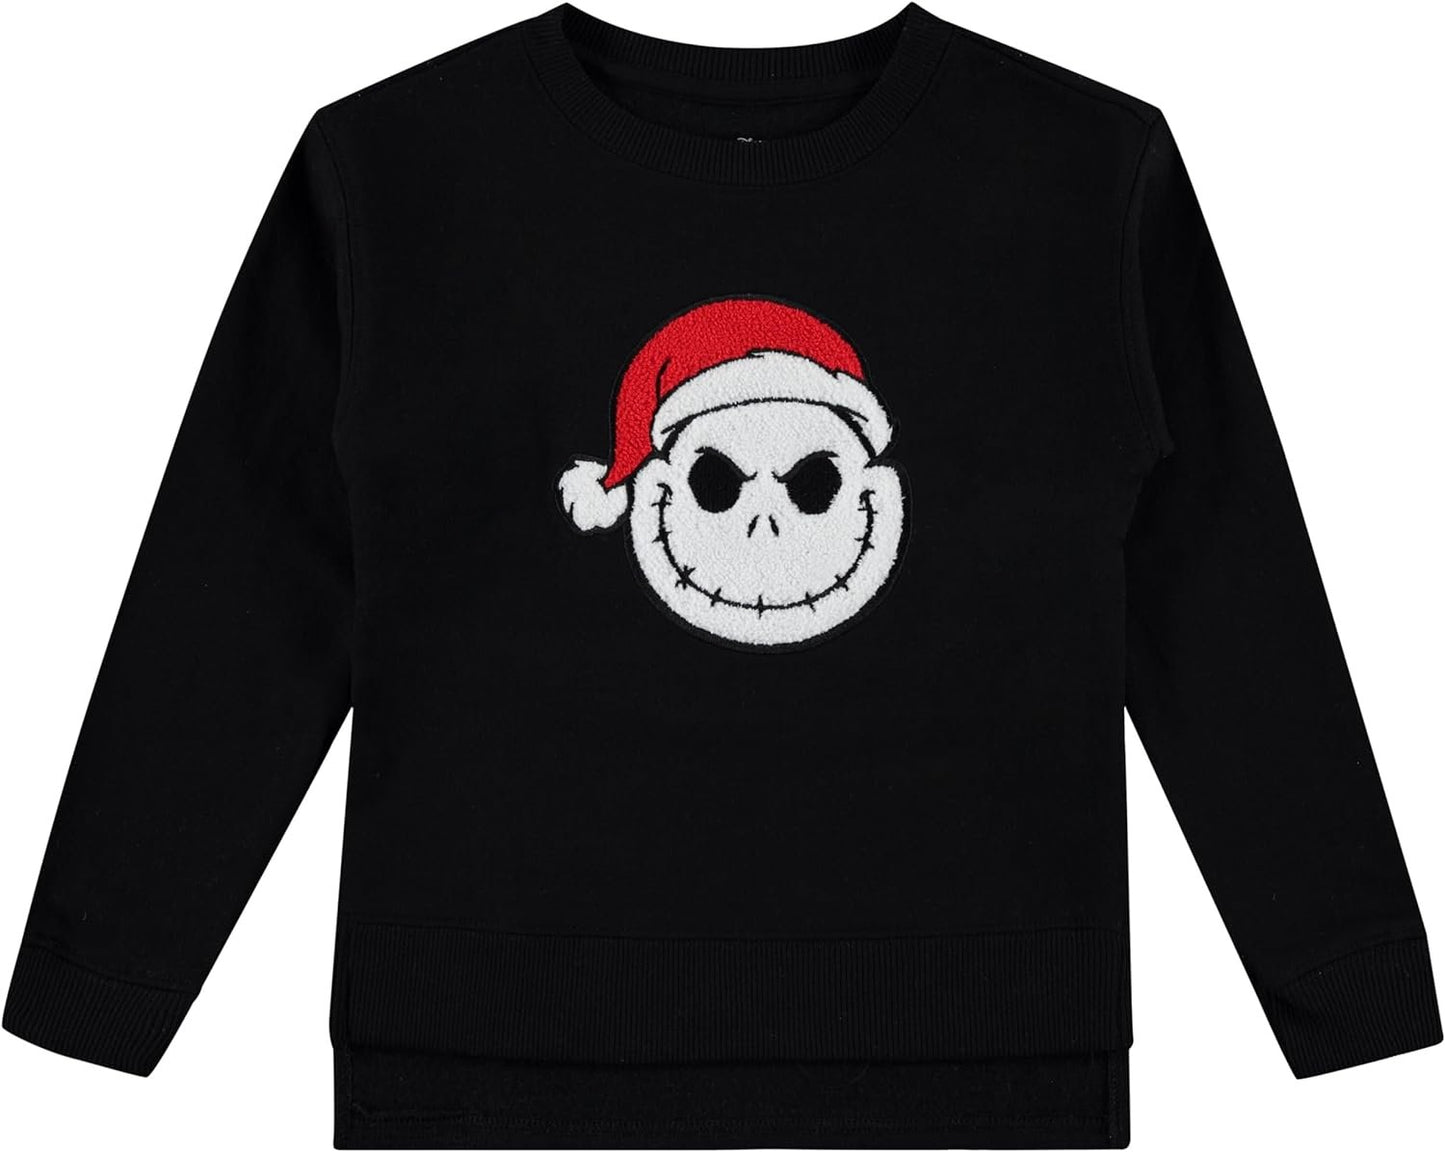 Disney Nightmare Before Christmas Pullover Sweatshirt - Big Girl Sizes 7-16